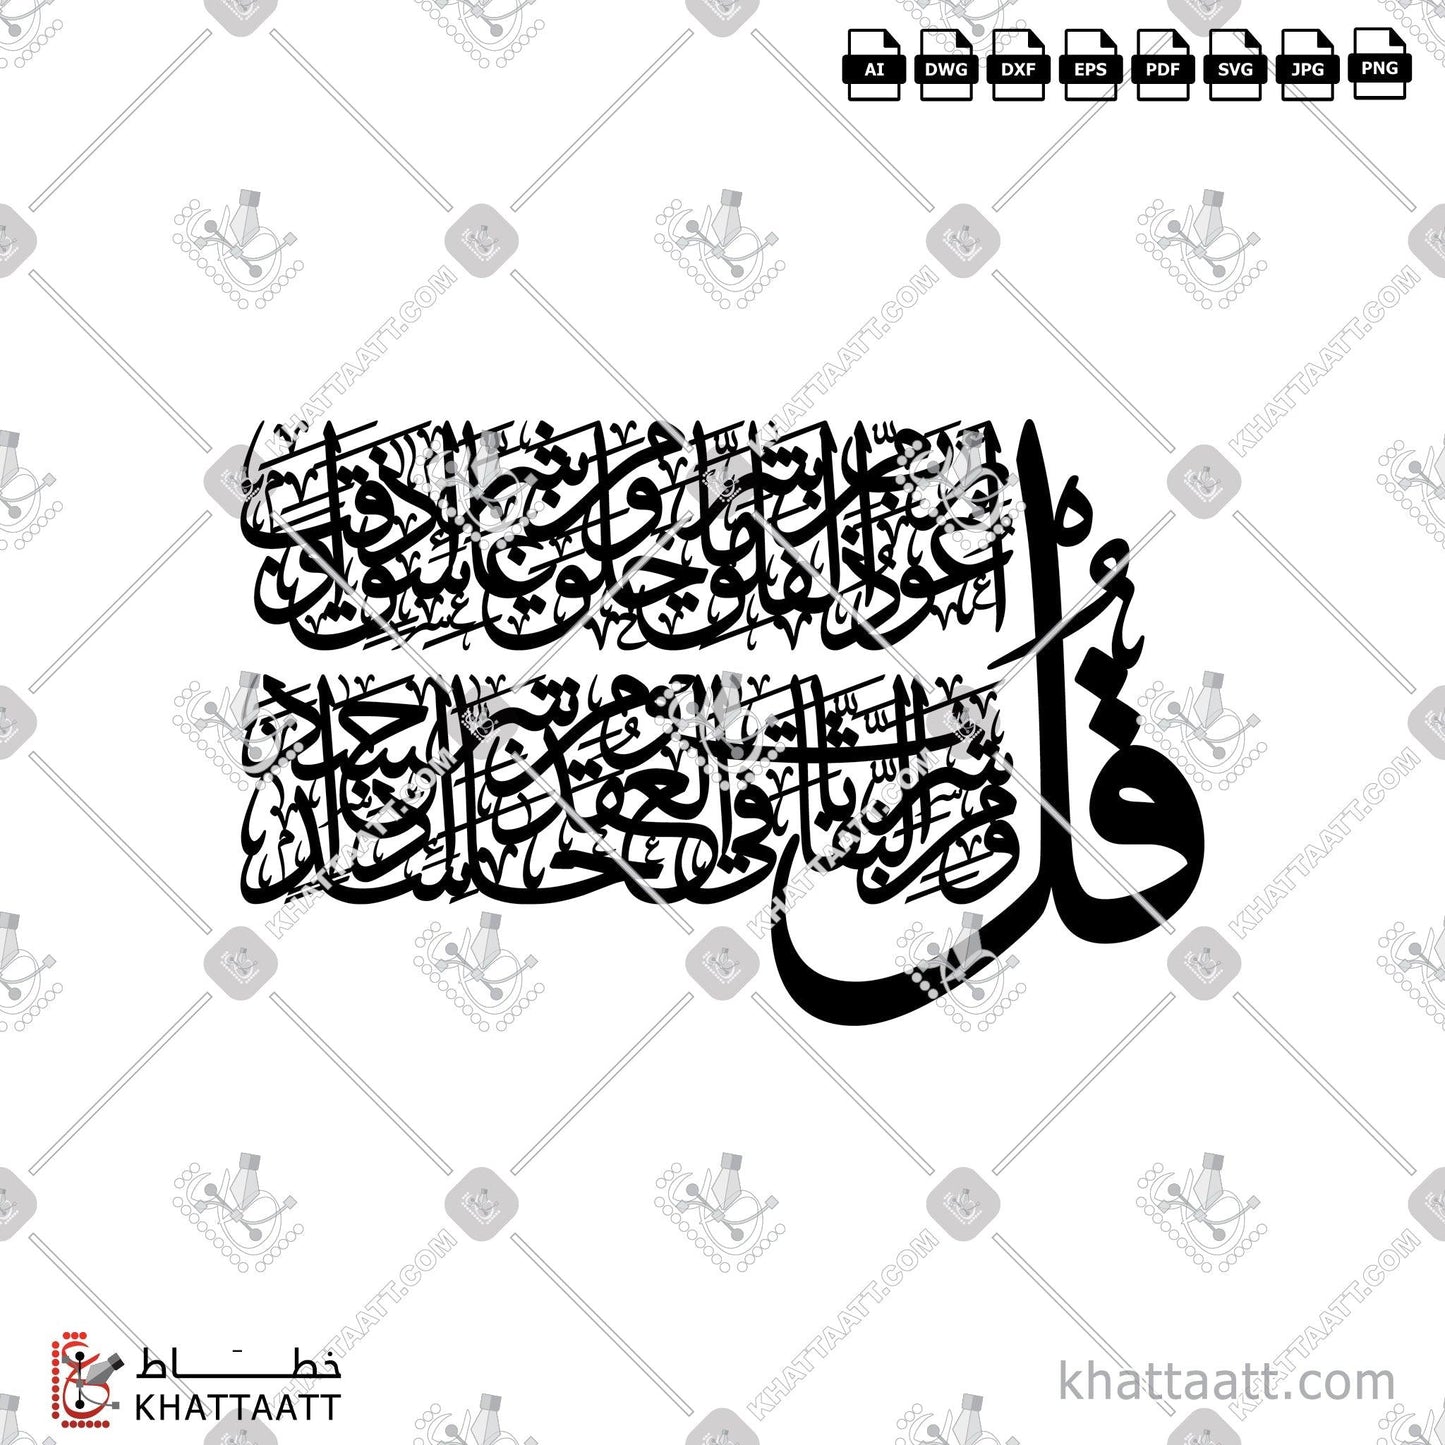 Digital Arabic Calligraphy Vector of Surat Al-Falaq - سورة الفلق in Thuluth - خط الثلث